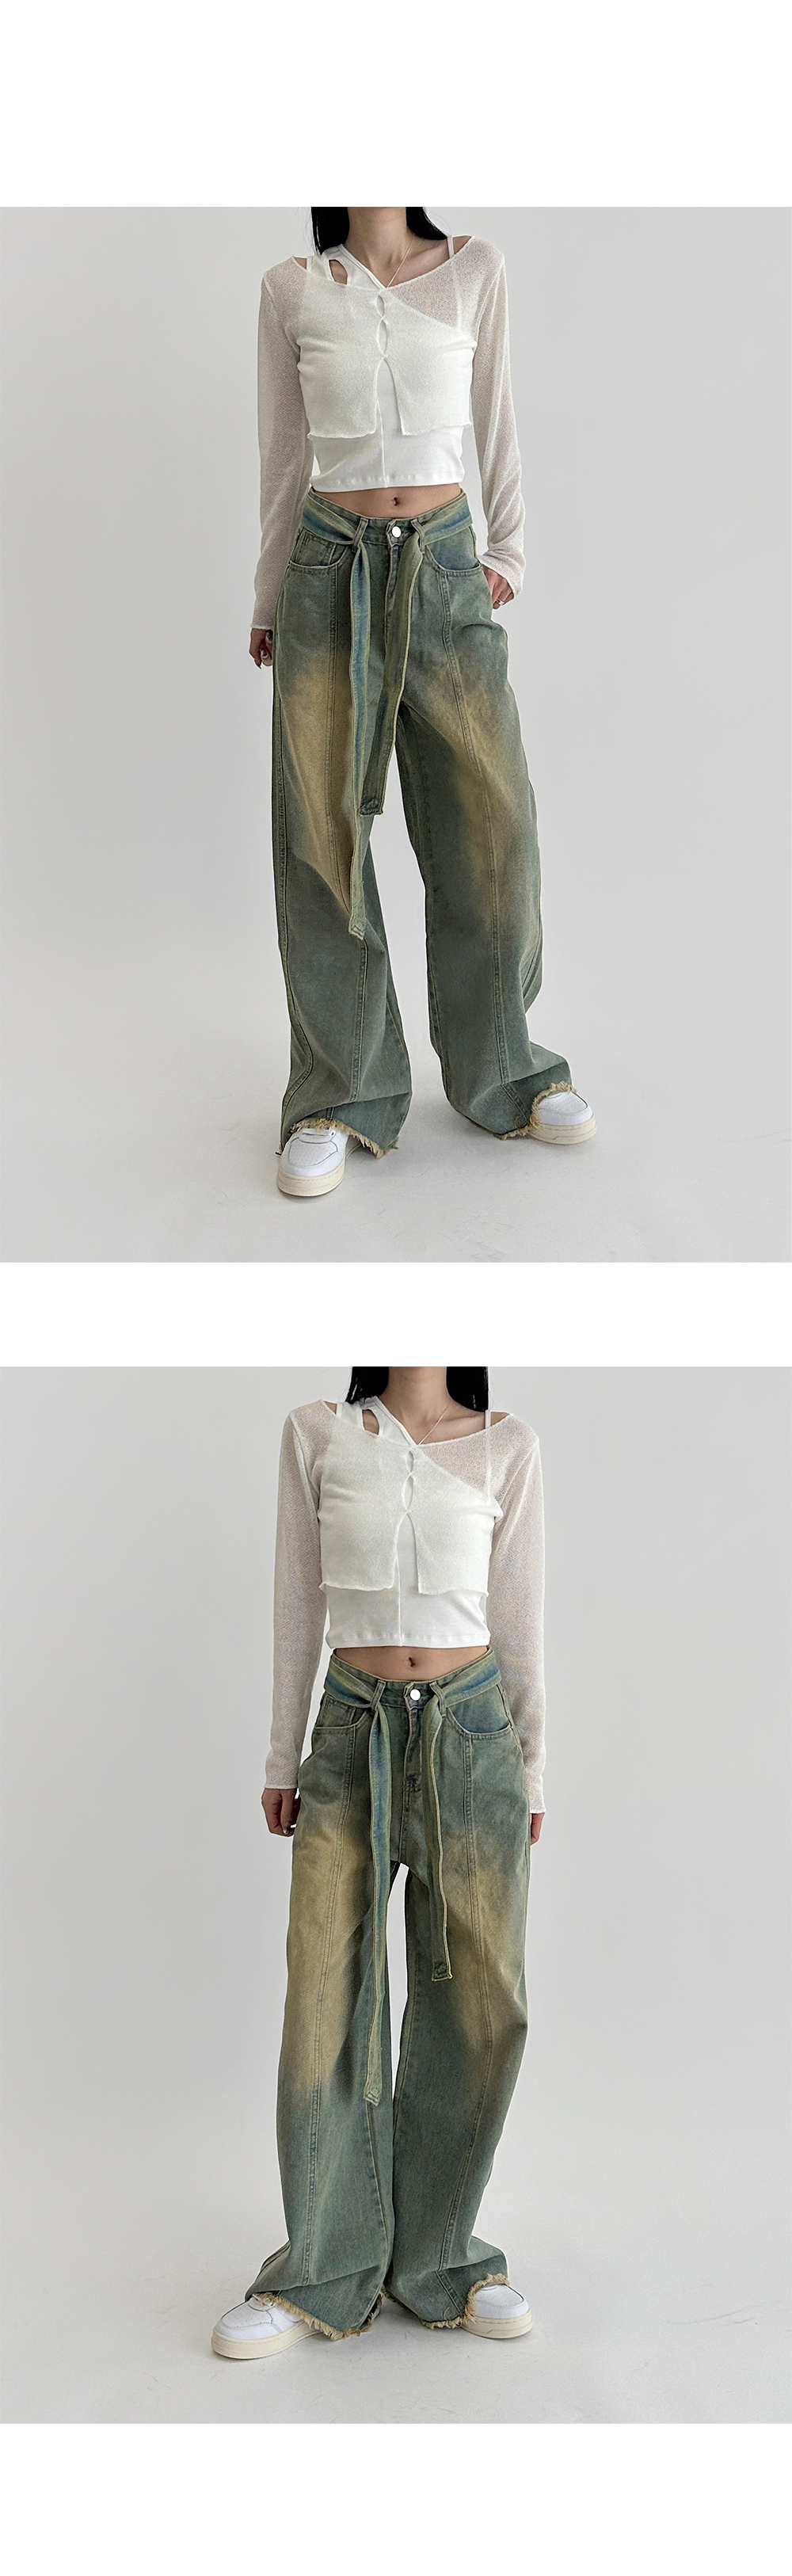 Pants model image-S1L8